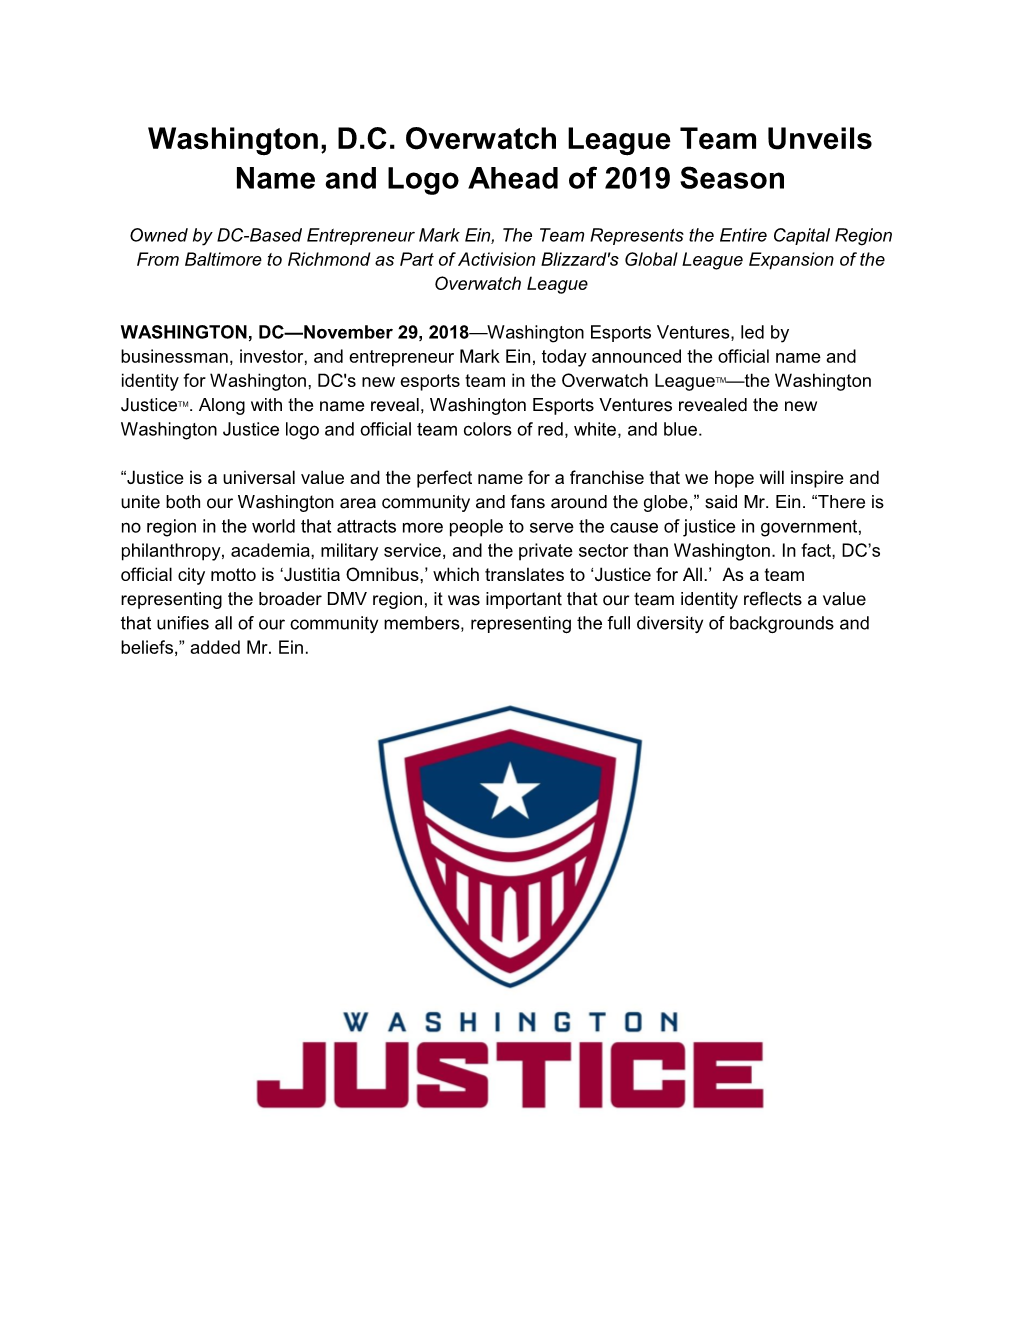 Washington, D.C. Overwatch League Team Unveils Name and Logo Ahead of 2019 Season